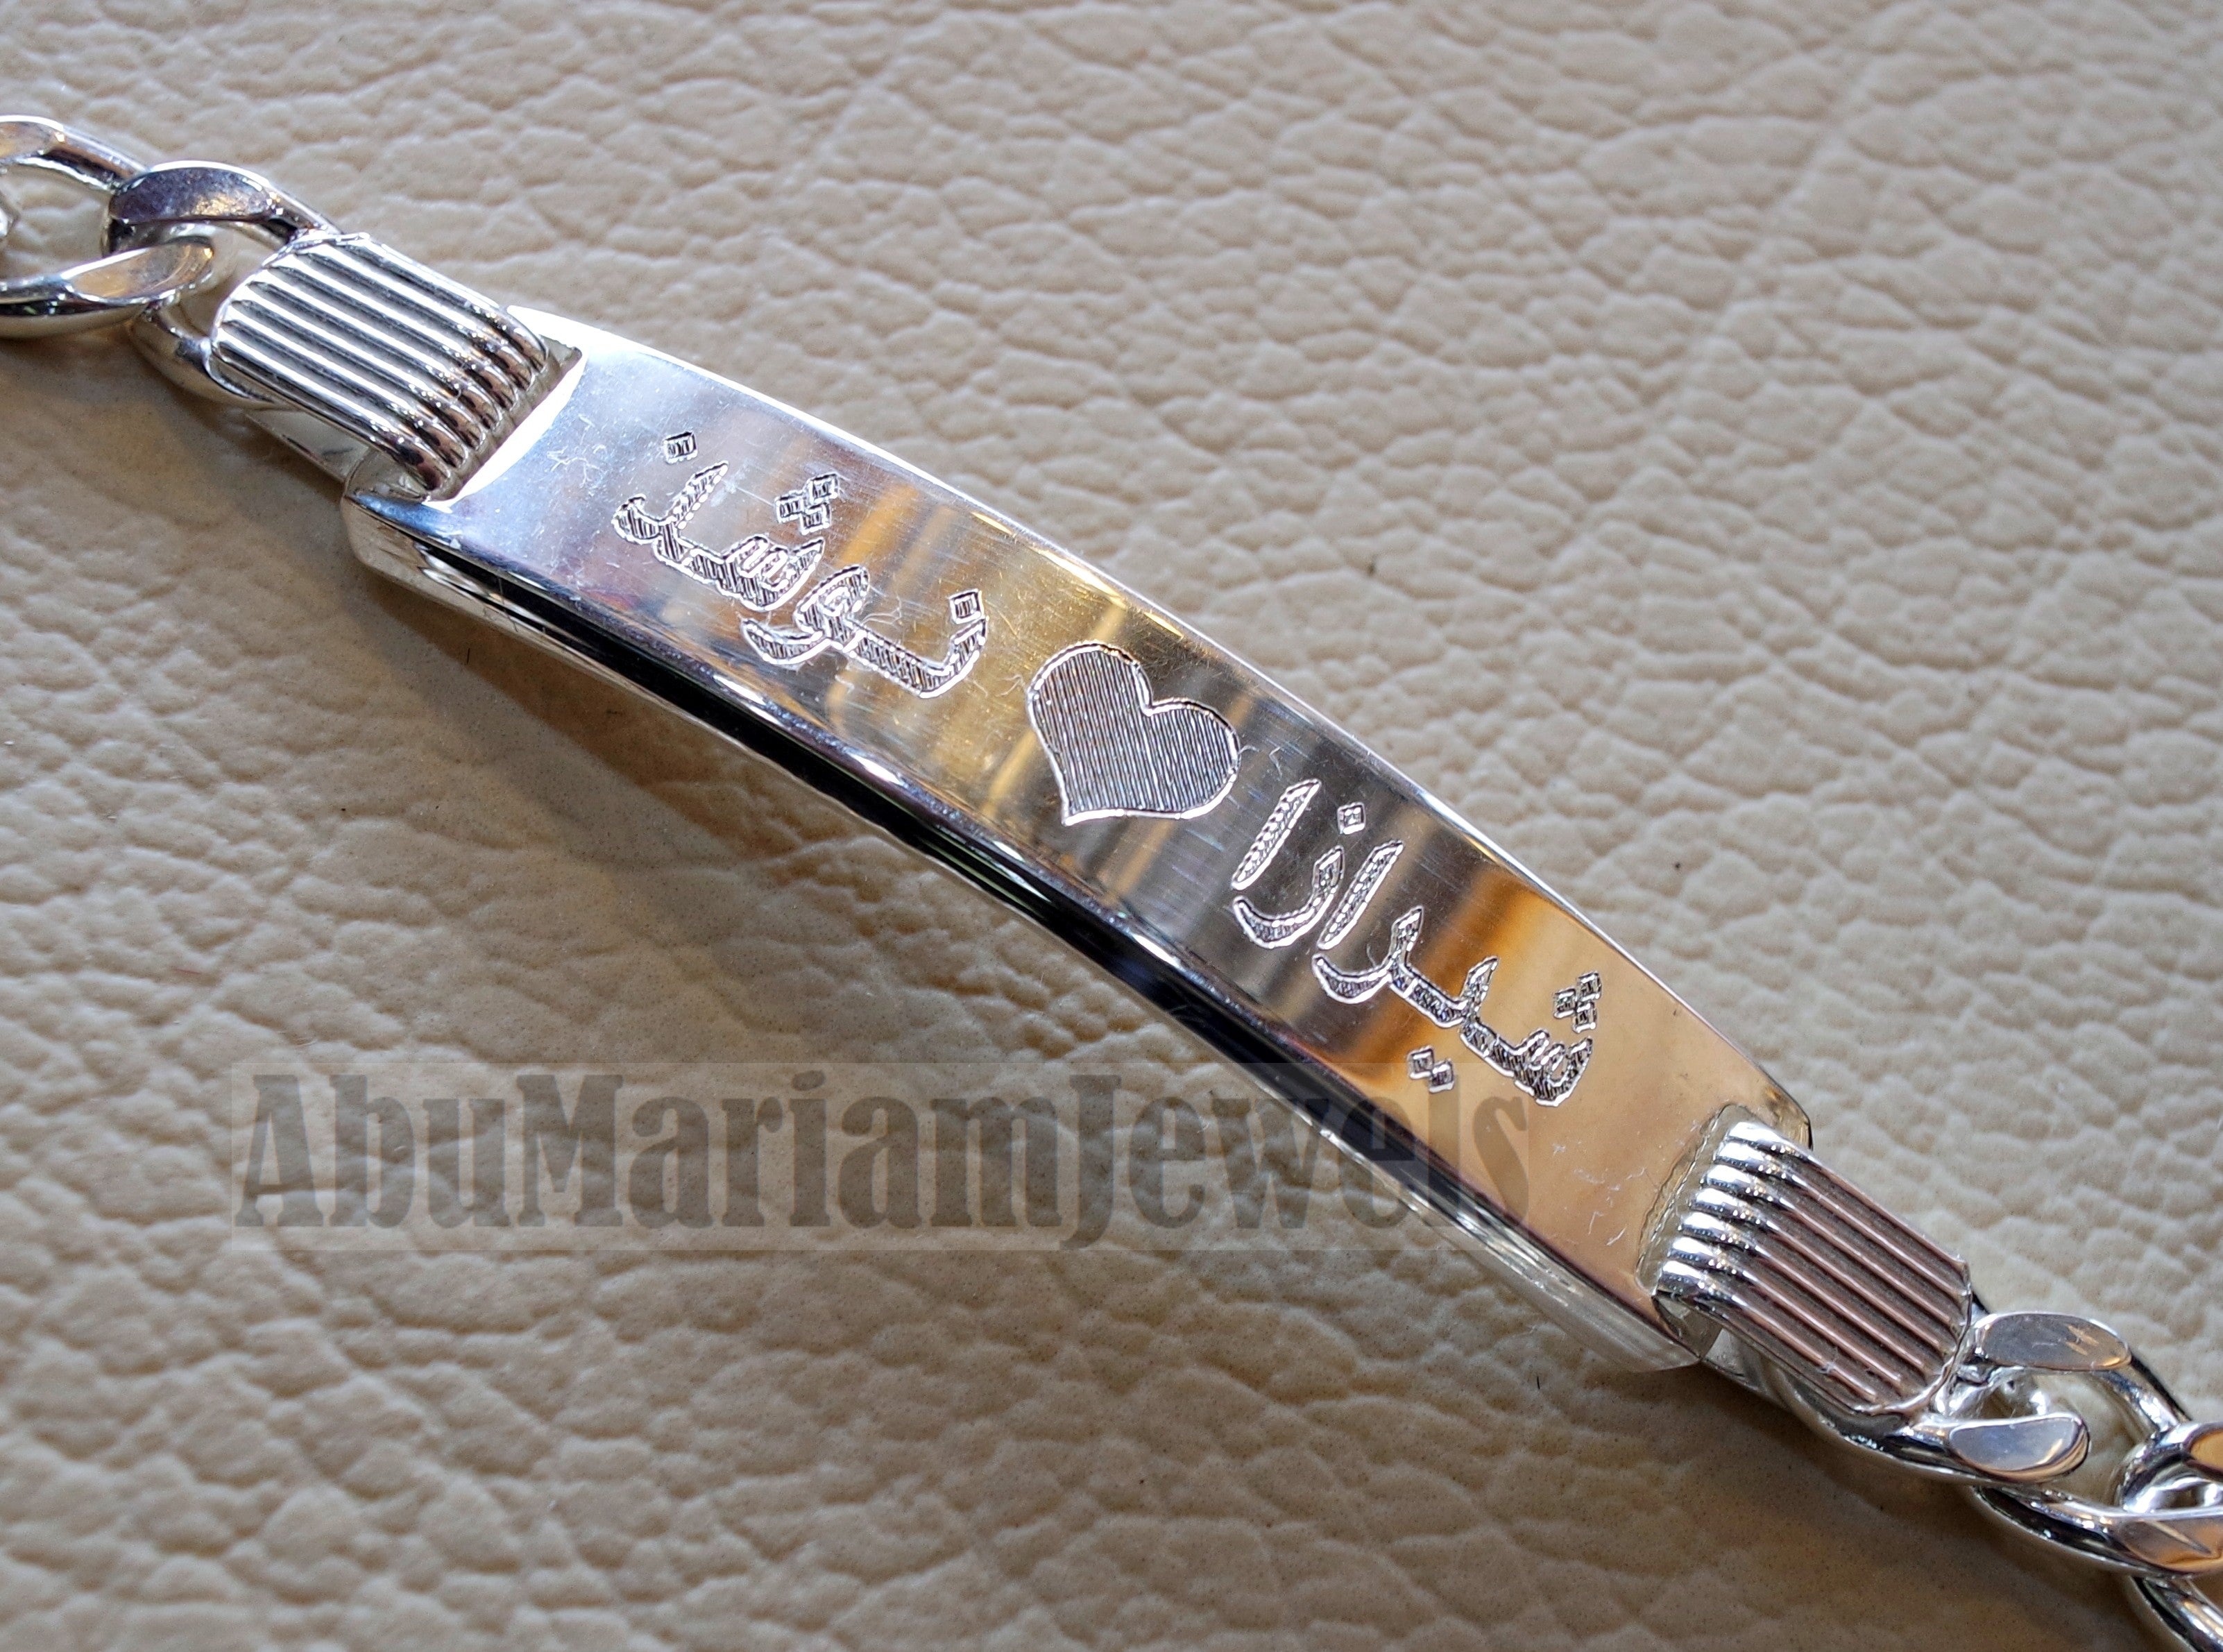 Men silver bracelet laser engraving personalized name Arabic